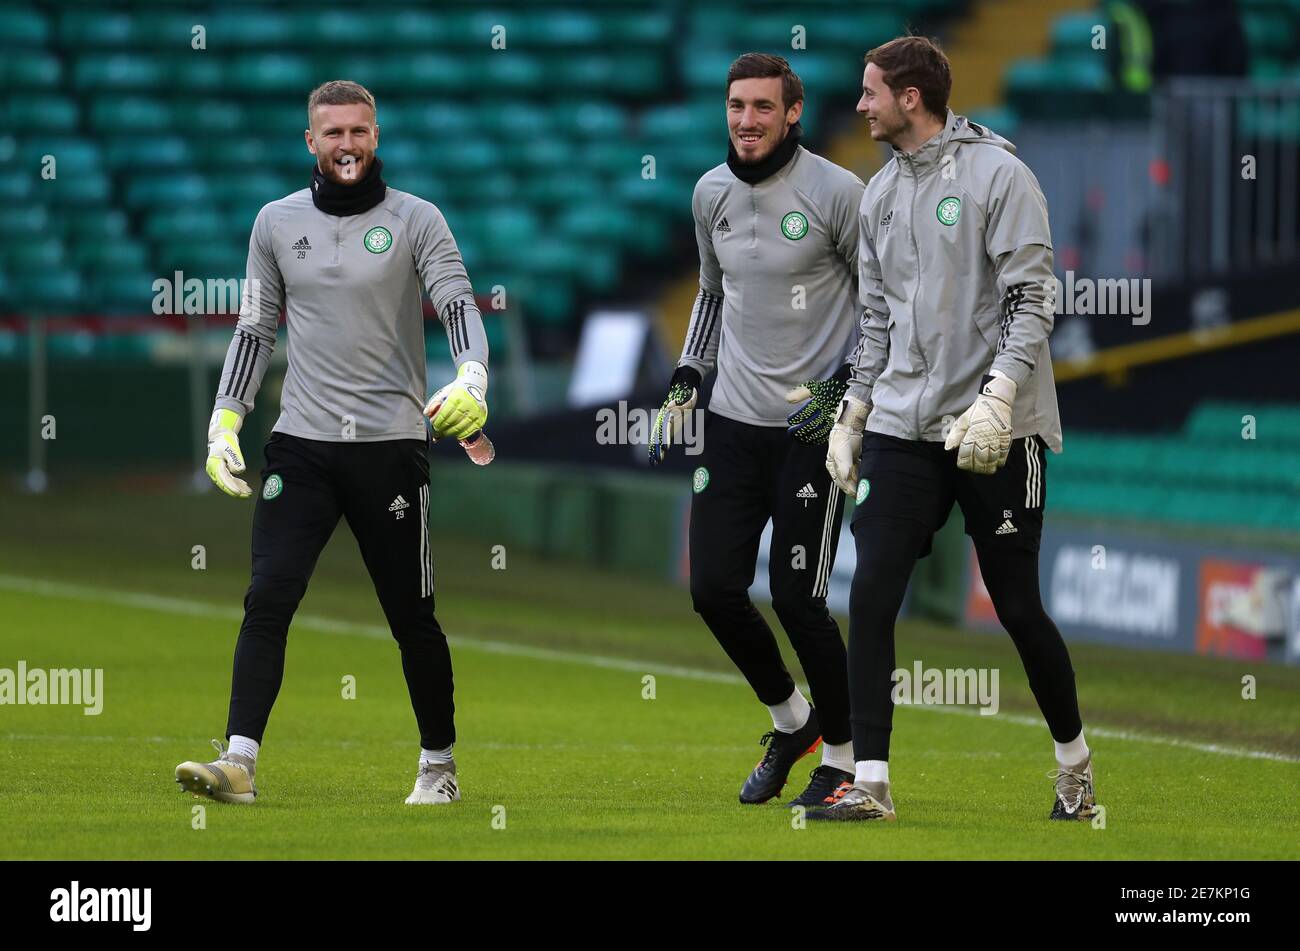 FIFA 22: Celtic keepers Barkas and Bain ahead of Hearts' Craig